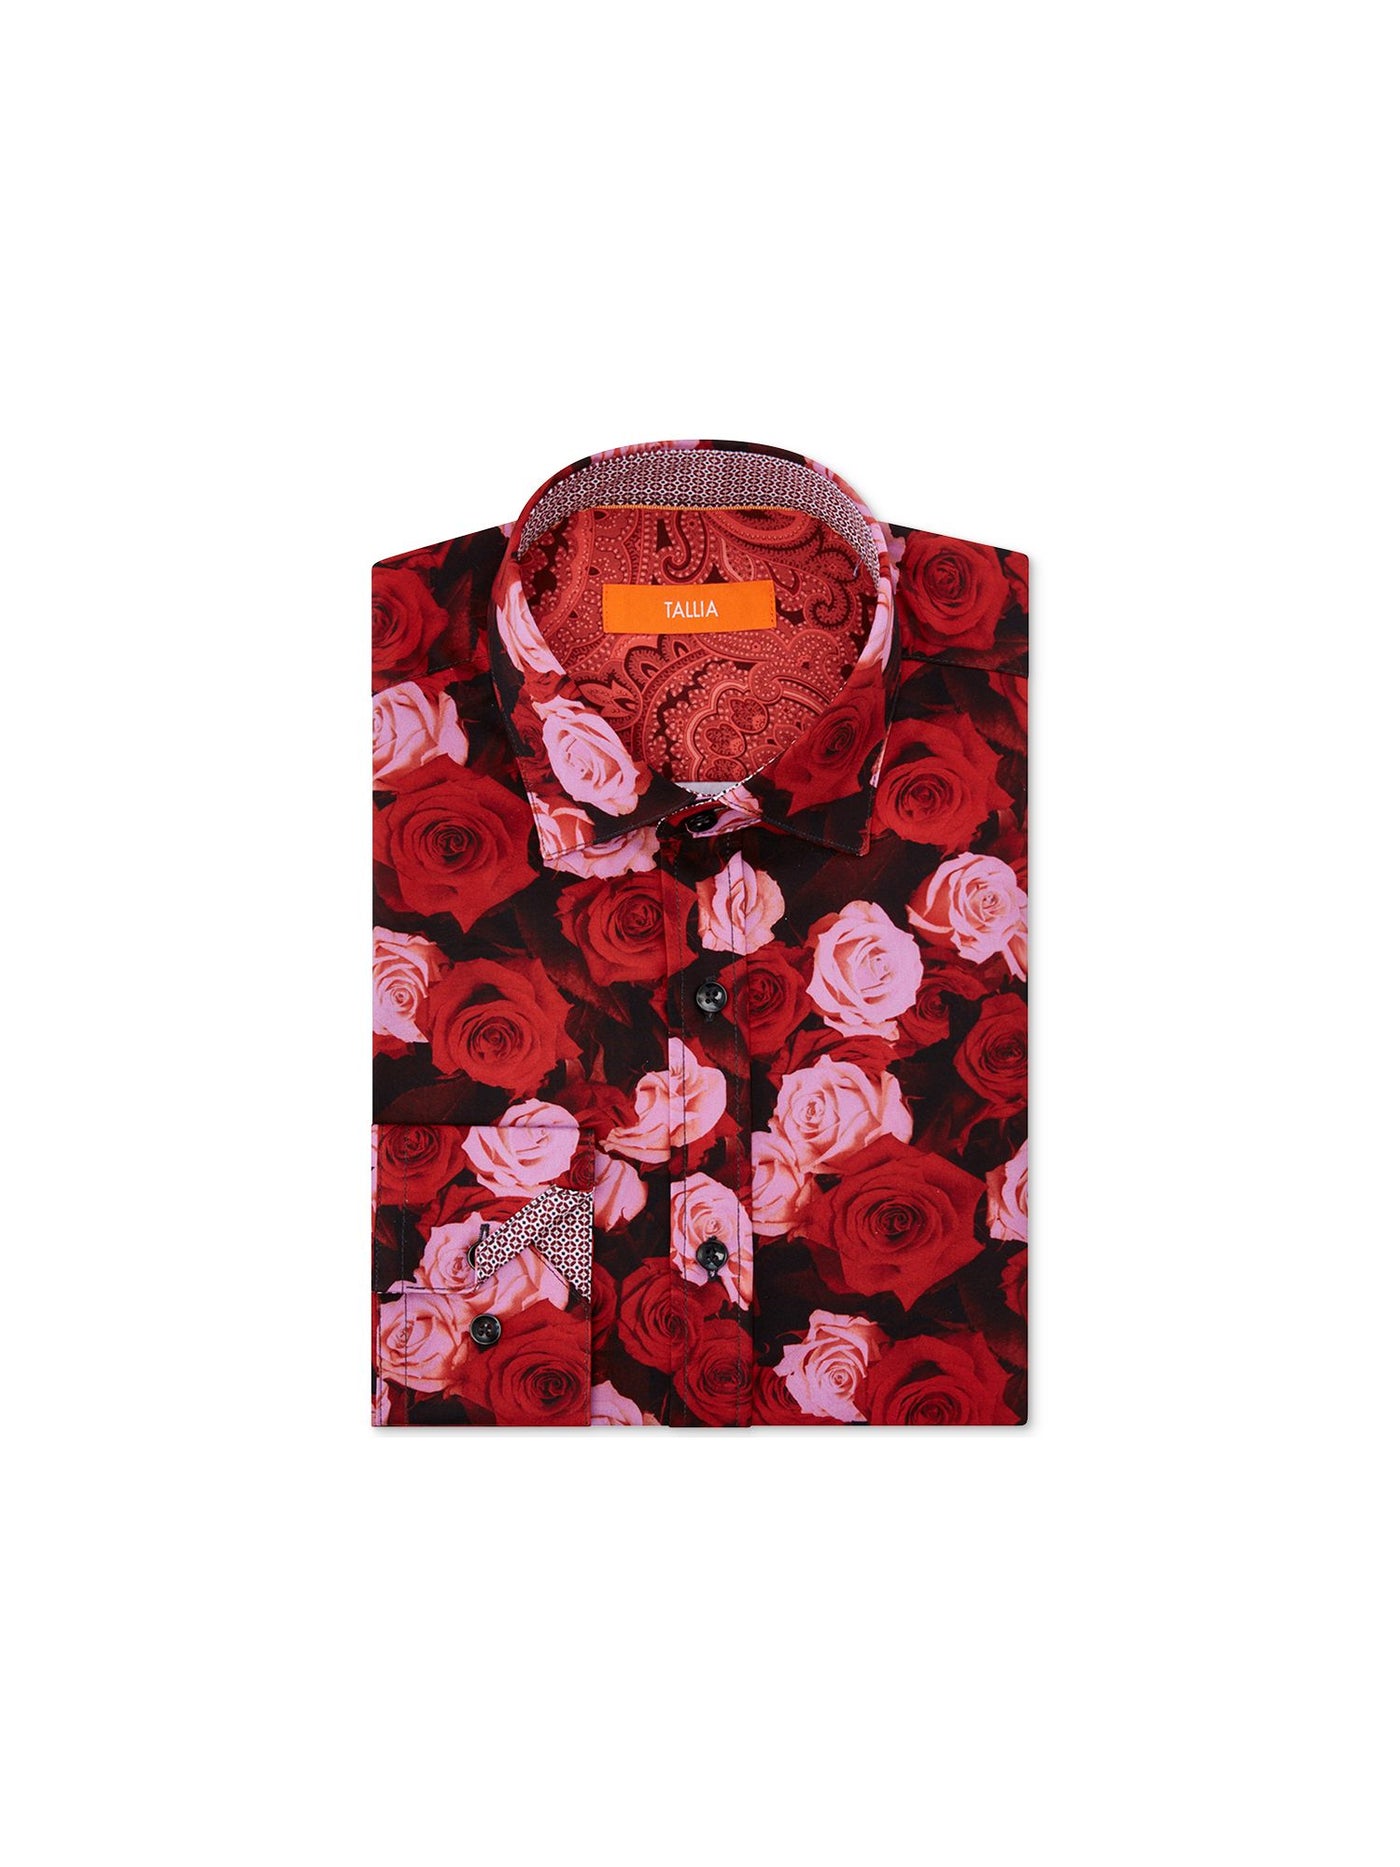 TALLIA Mens Red Floral Spread Collar Slim Fit Button Down Moisture Wicking Moisture Wicking Shirt L 16/16.5- 32/33